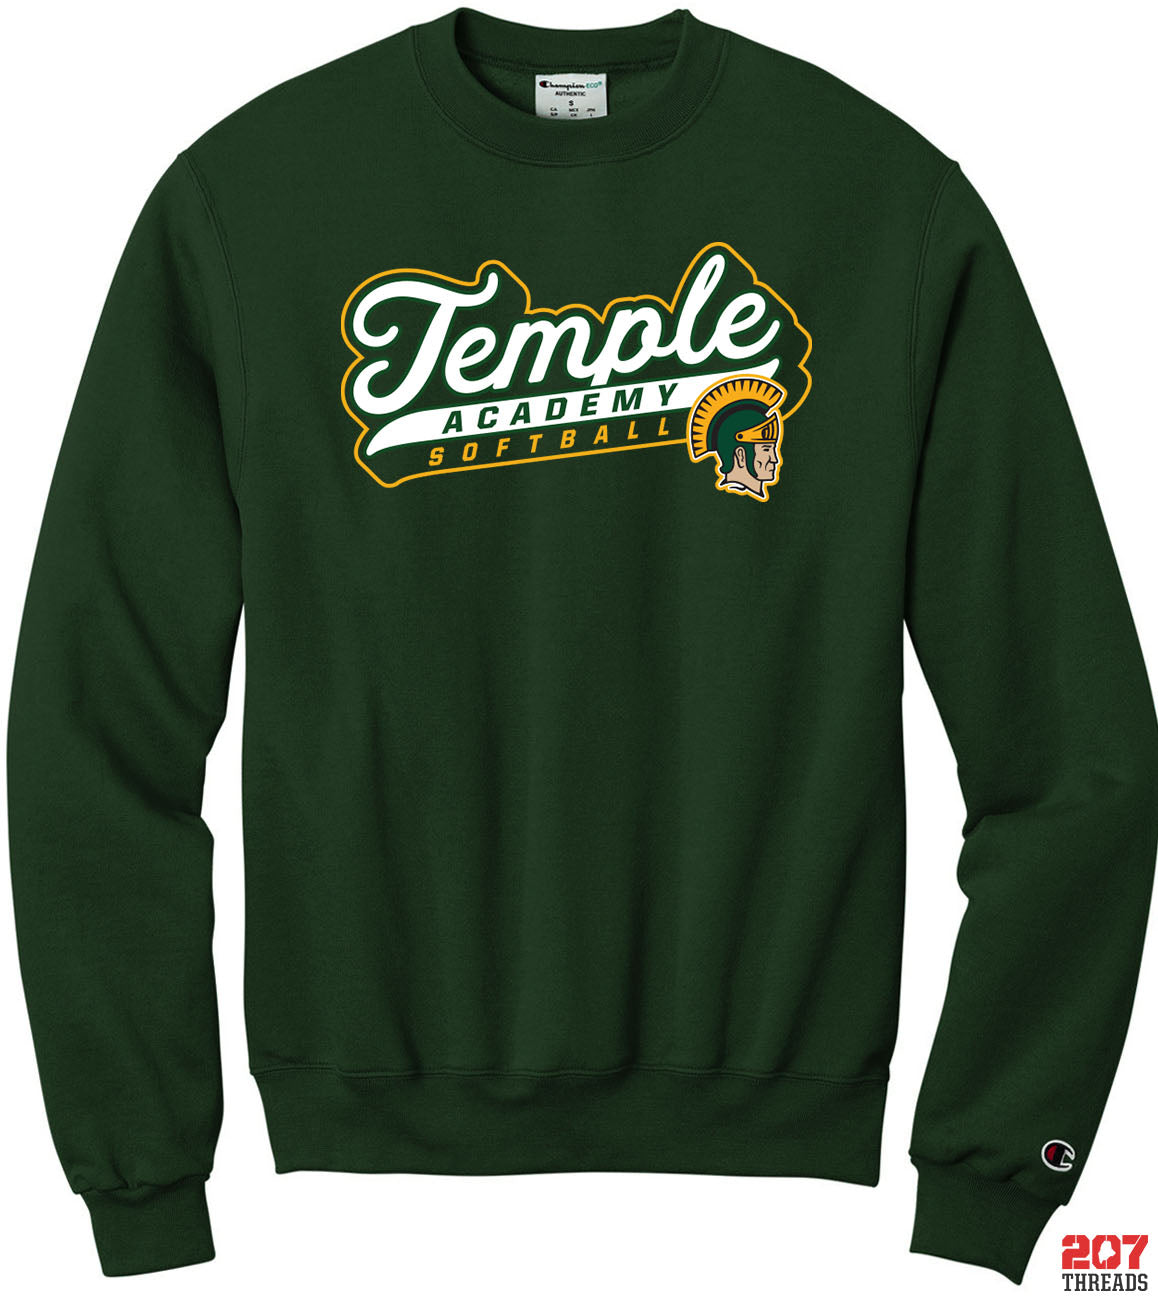 Temple Academy - Softball Script Logo - Champion Sweatshirt-207 Threads